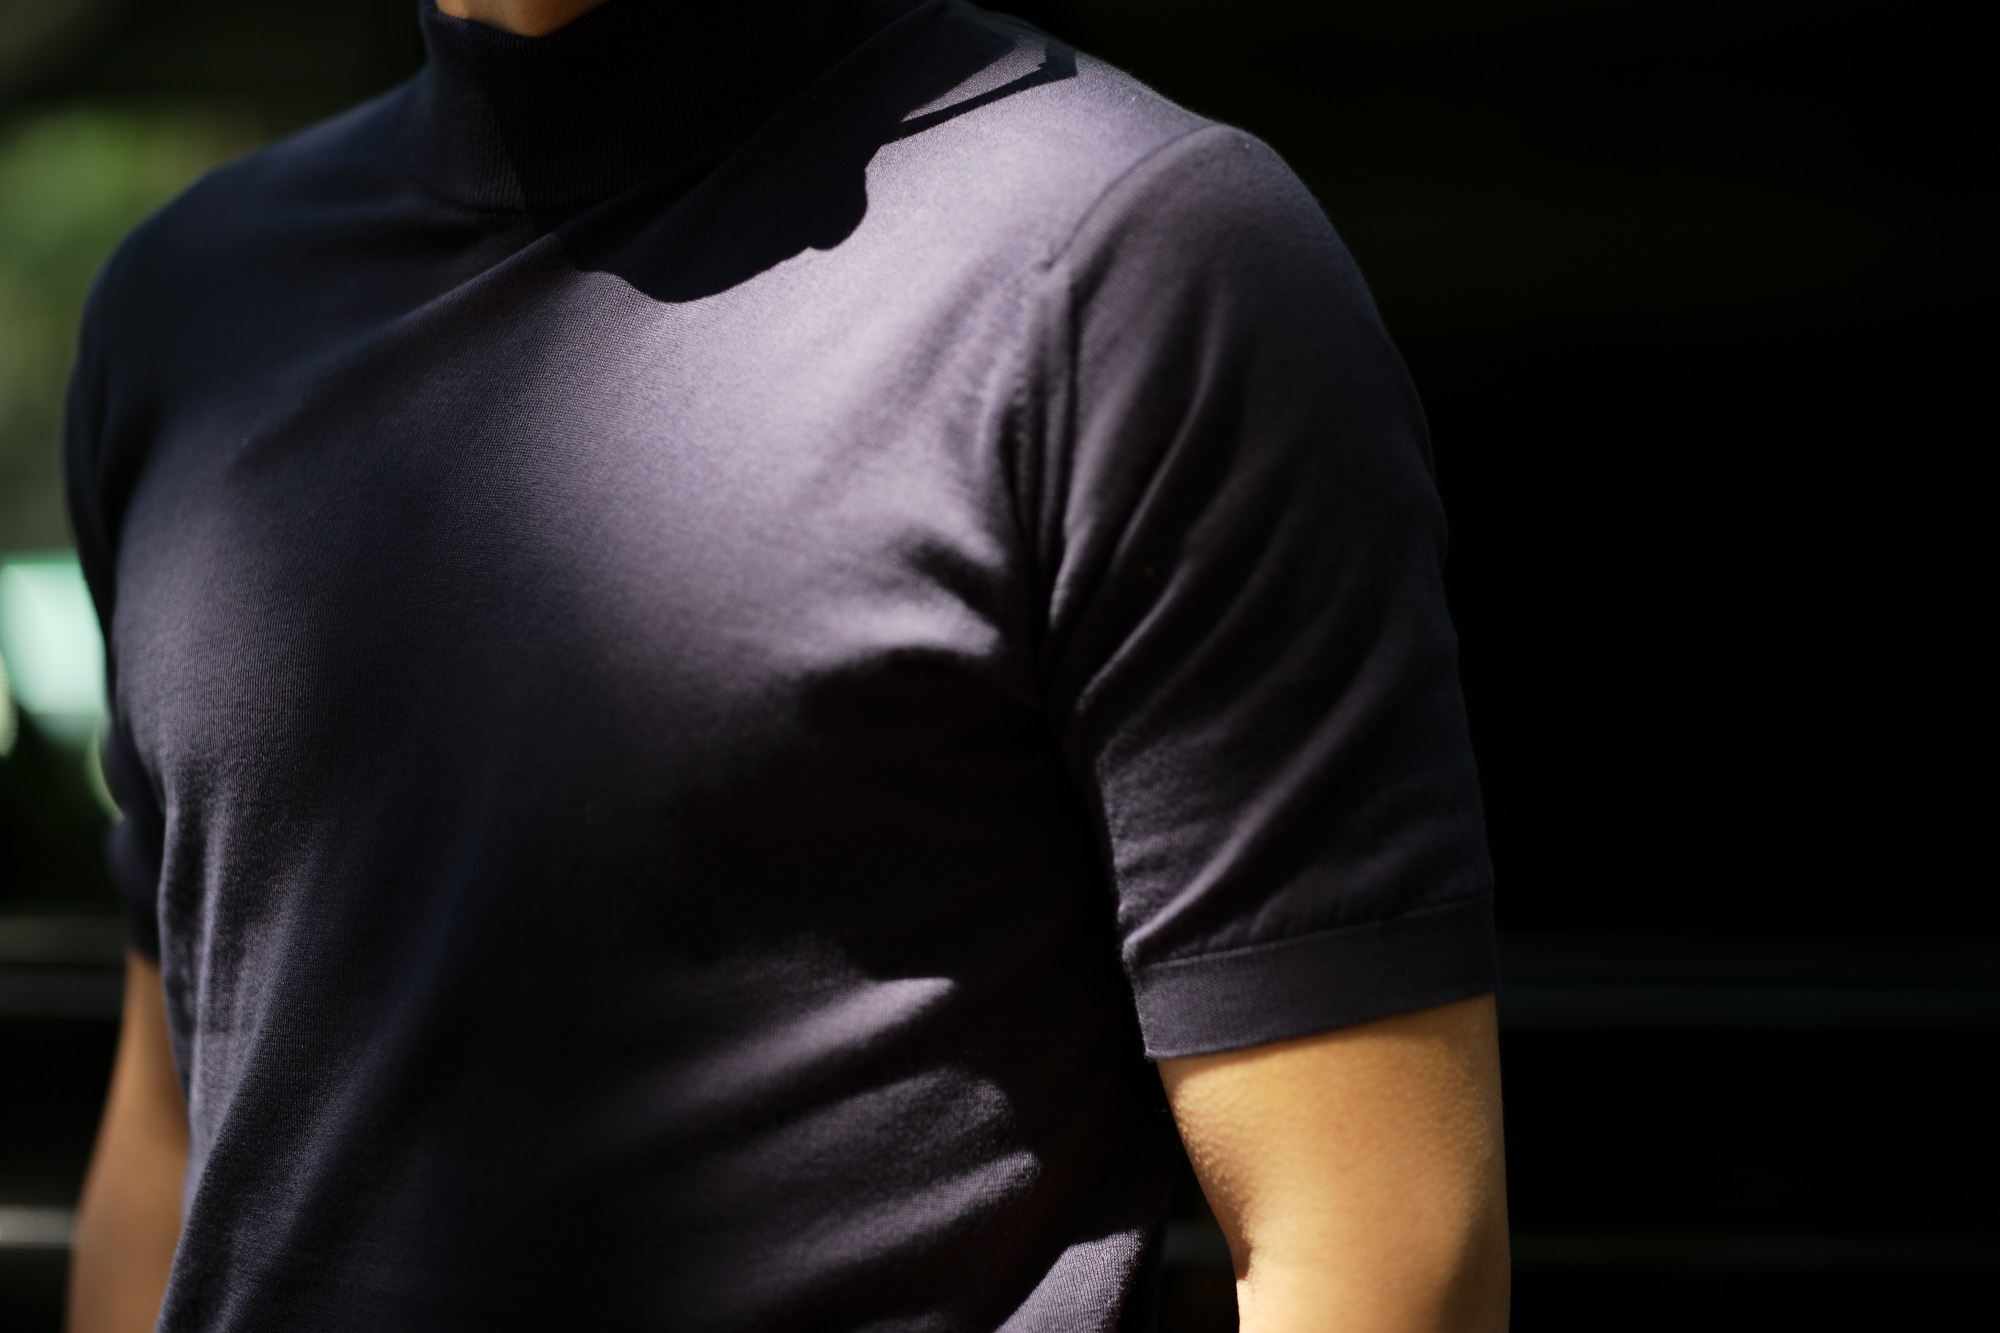 JOHN SMEDLEY (ジョンスメドレー) S3813 Mock neck T-shirt SEA ISLAND COTTON (シーアイランドコットン) コットンニット モックネック Tシャツ NAVY (ネイビー) Made in England (イギリス製) 2019 春夏新作 johnsmedley 愛知 名古屋 altoediritto アルトエデリット